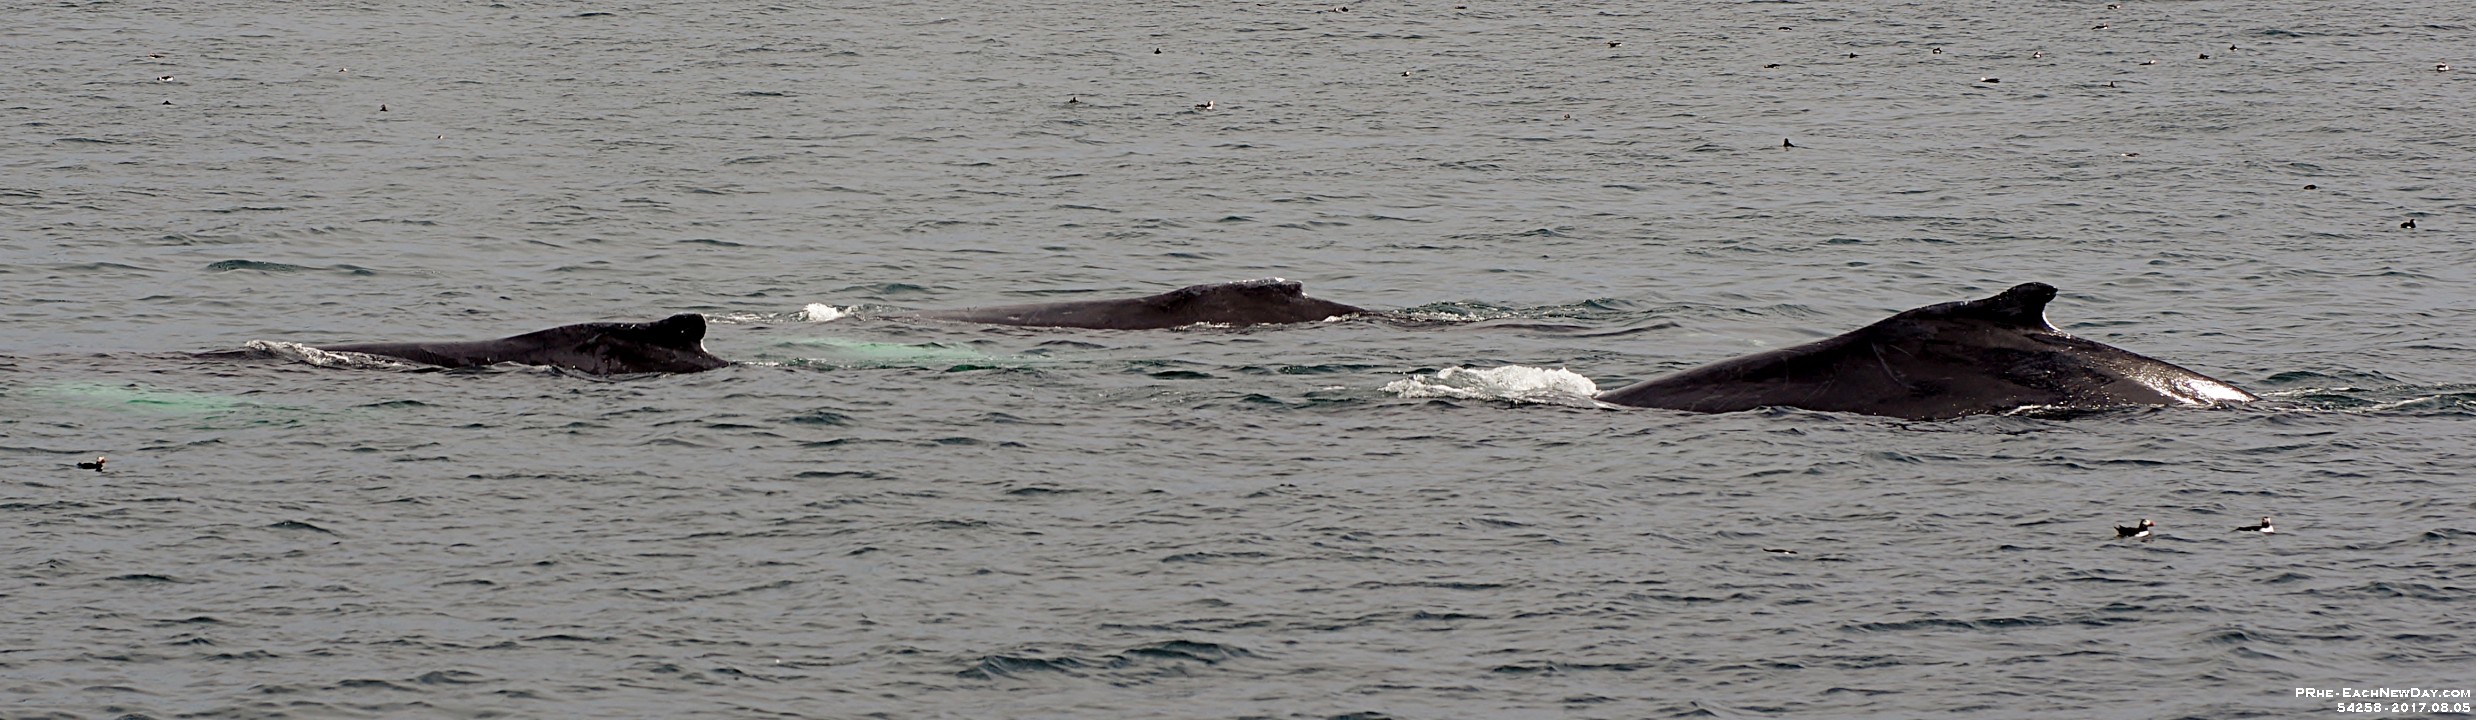 54258CrLeUsm - Gatherall's Puffin - Whale Watch - Bay Bulls